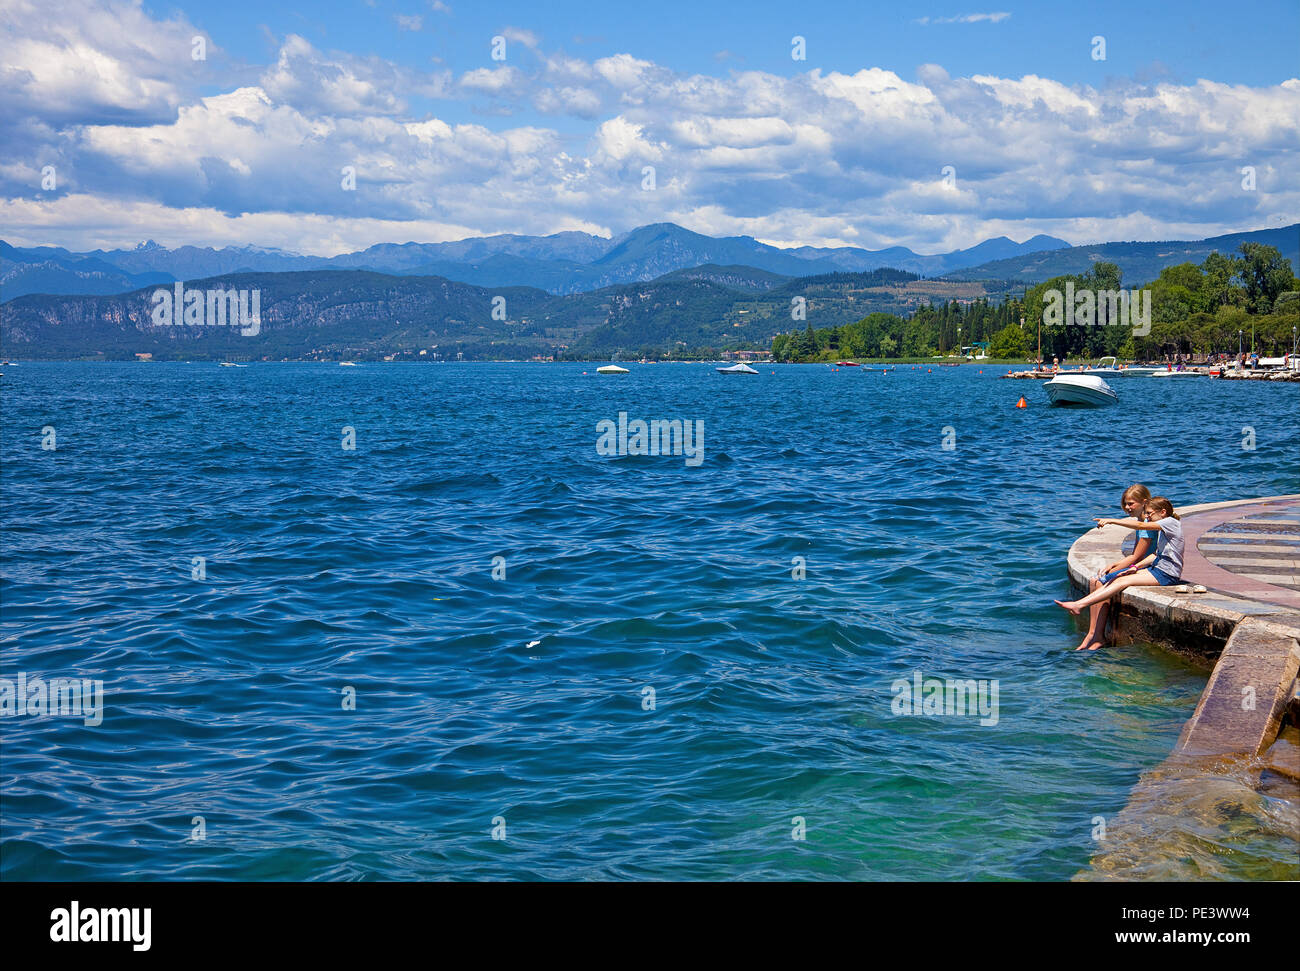 Two young girls sitting at lake promenade of Lazise, Garda lake, province Verona, Italy Stock Photo